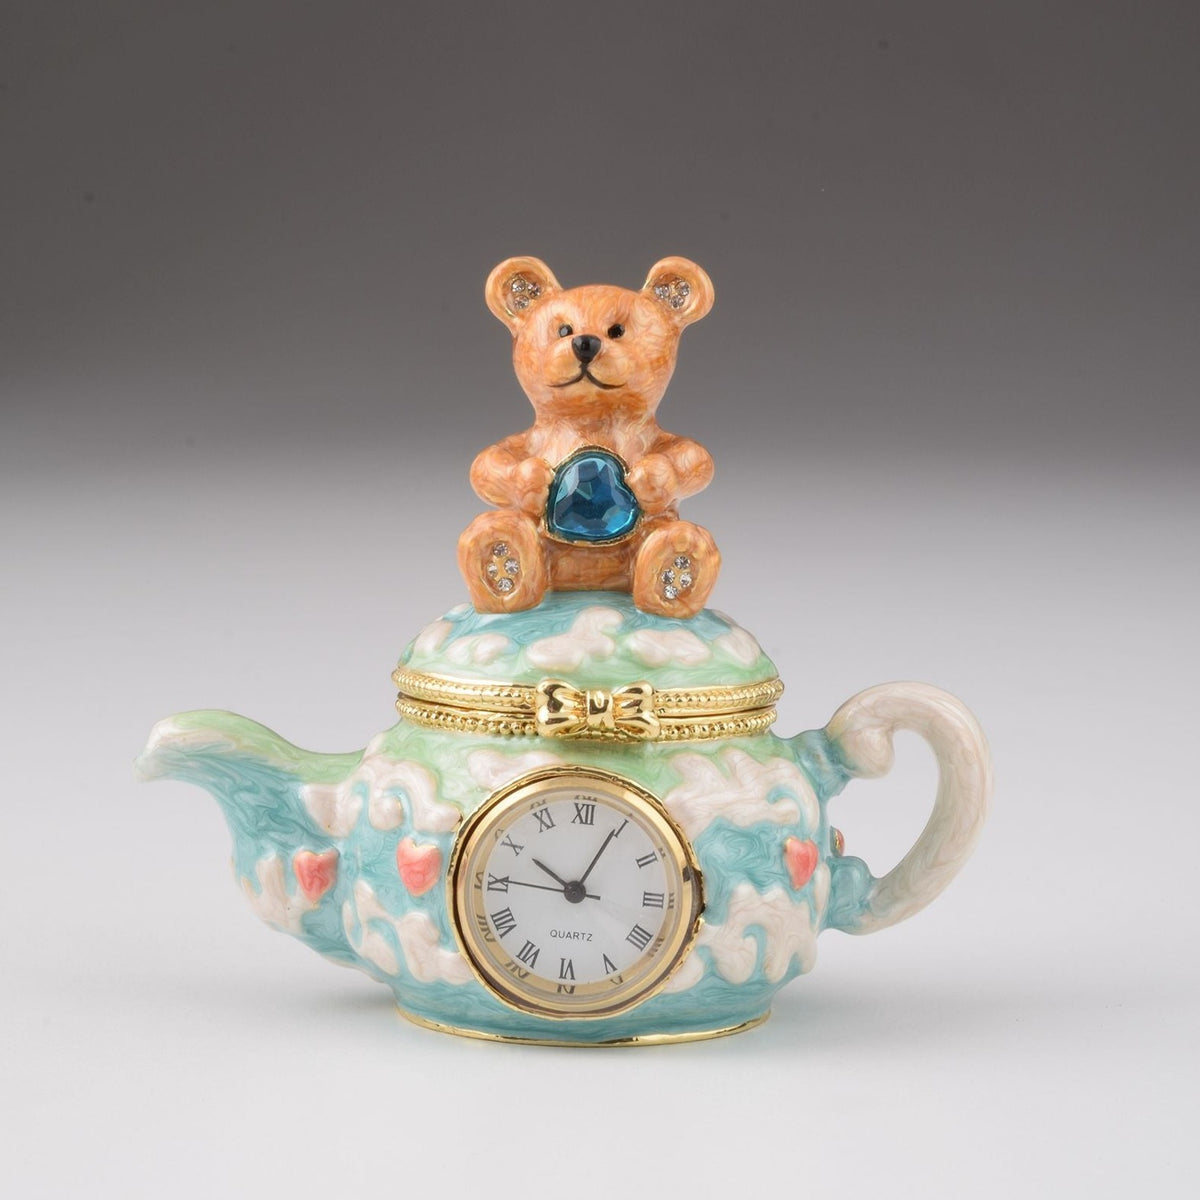 Keren Kopal Teddy Bear Sitting on a Teapot  89.00